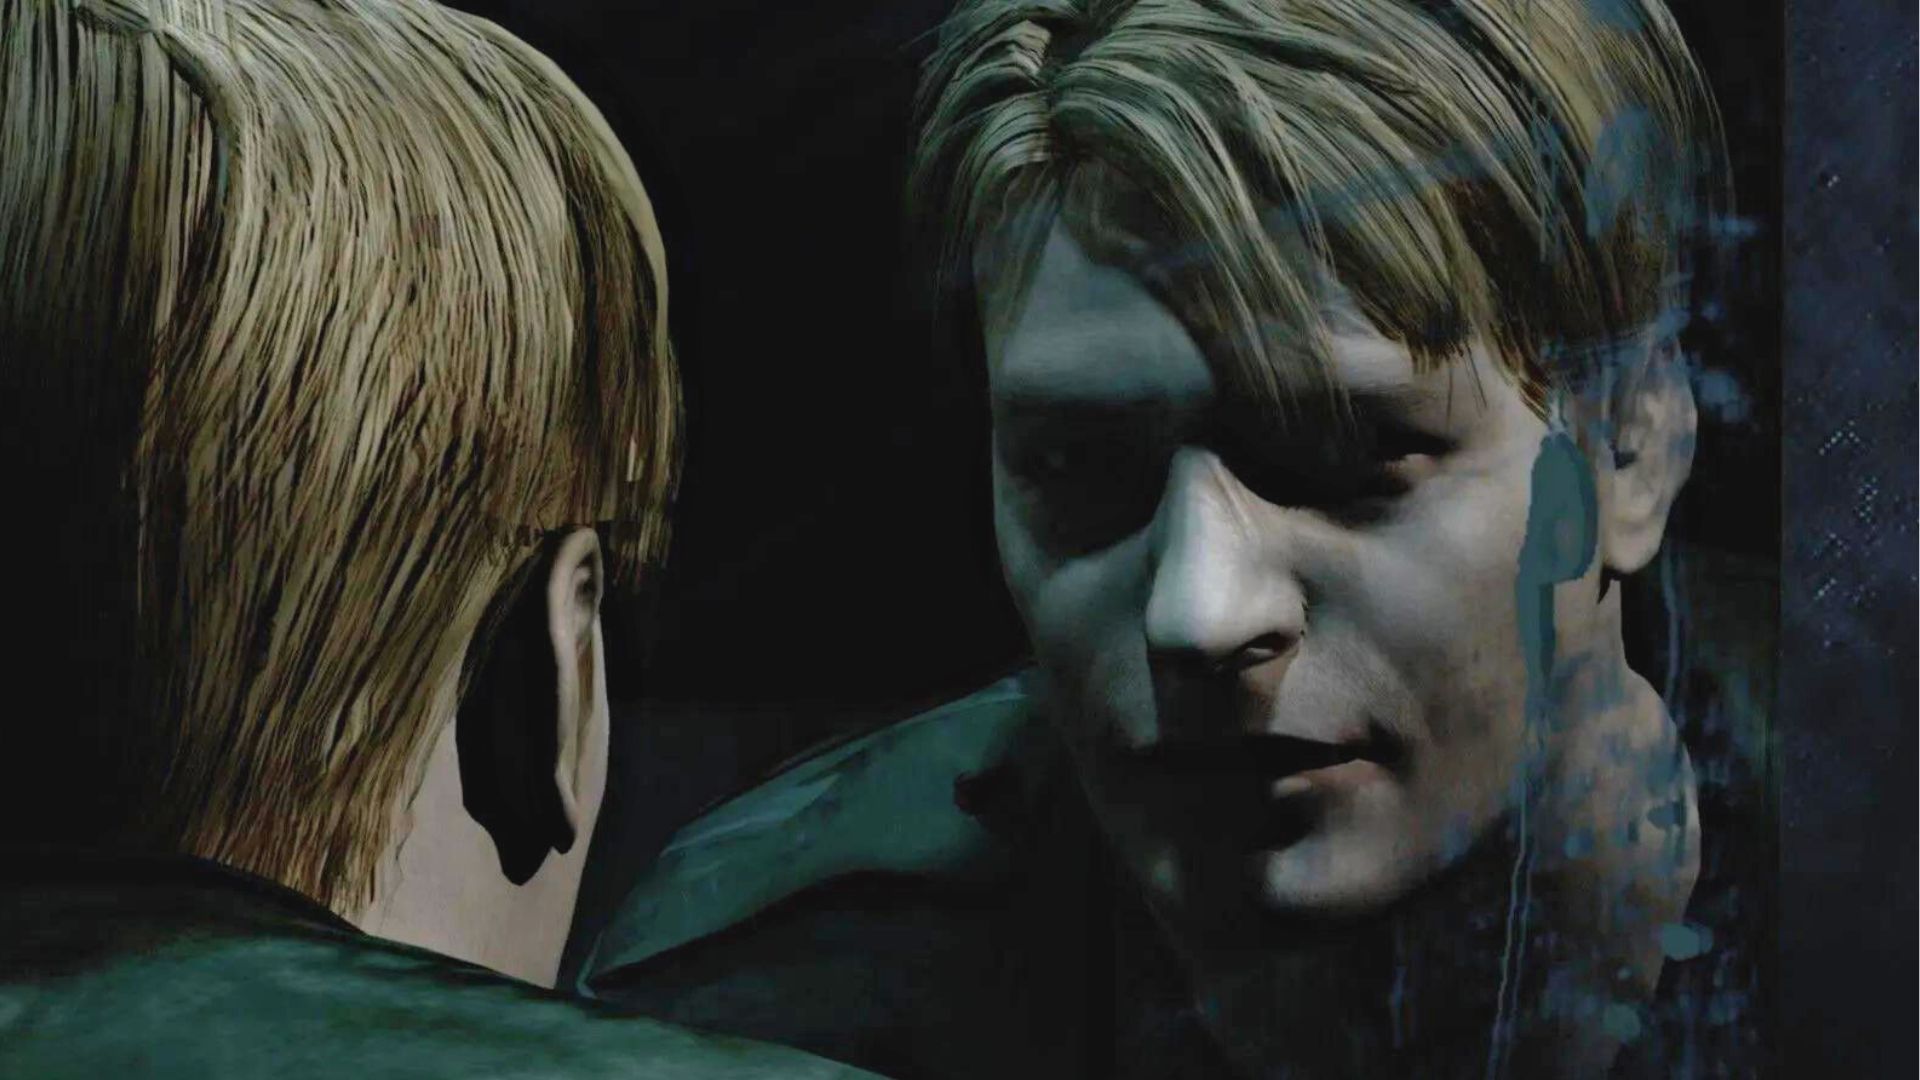 Silent Hill 2 art director denounces fourth wall break as 